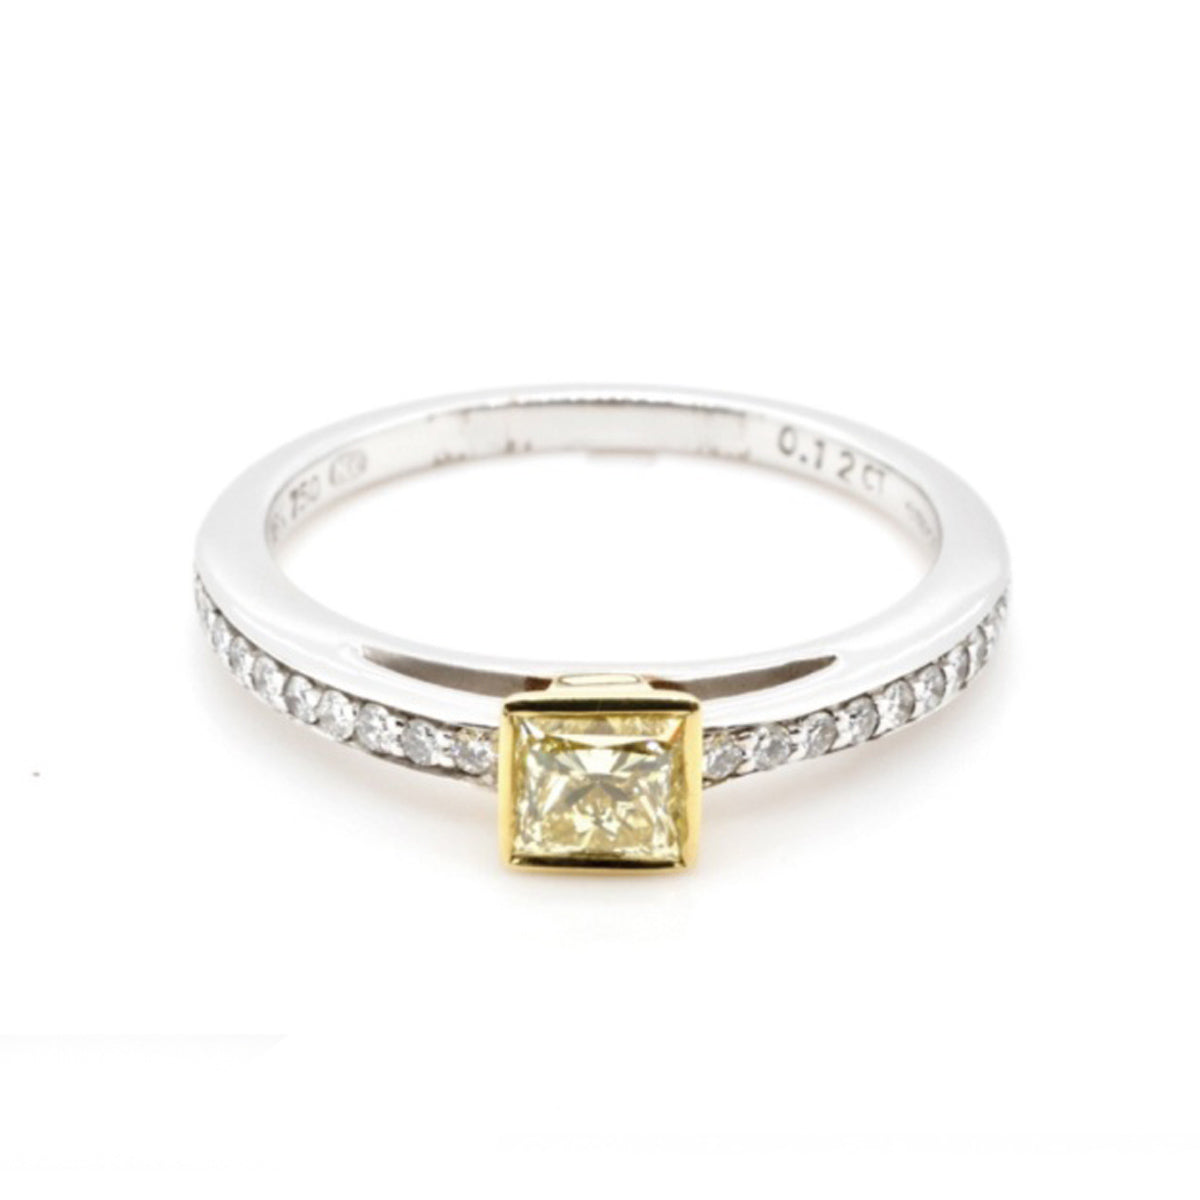 18ct White & Yellow Gold FancyYellow Diamond Ring